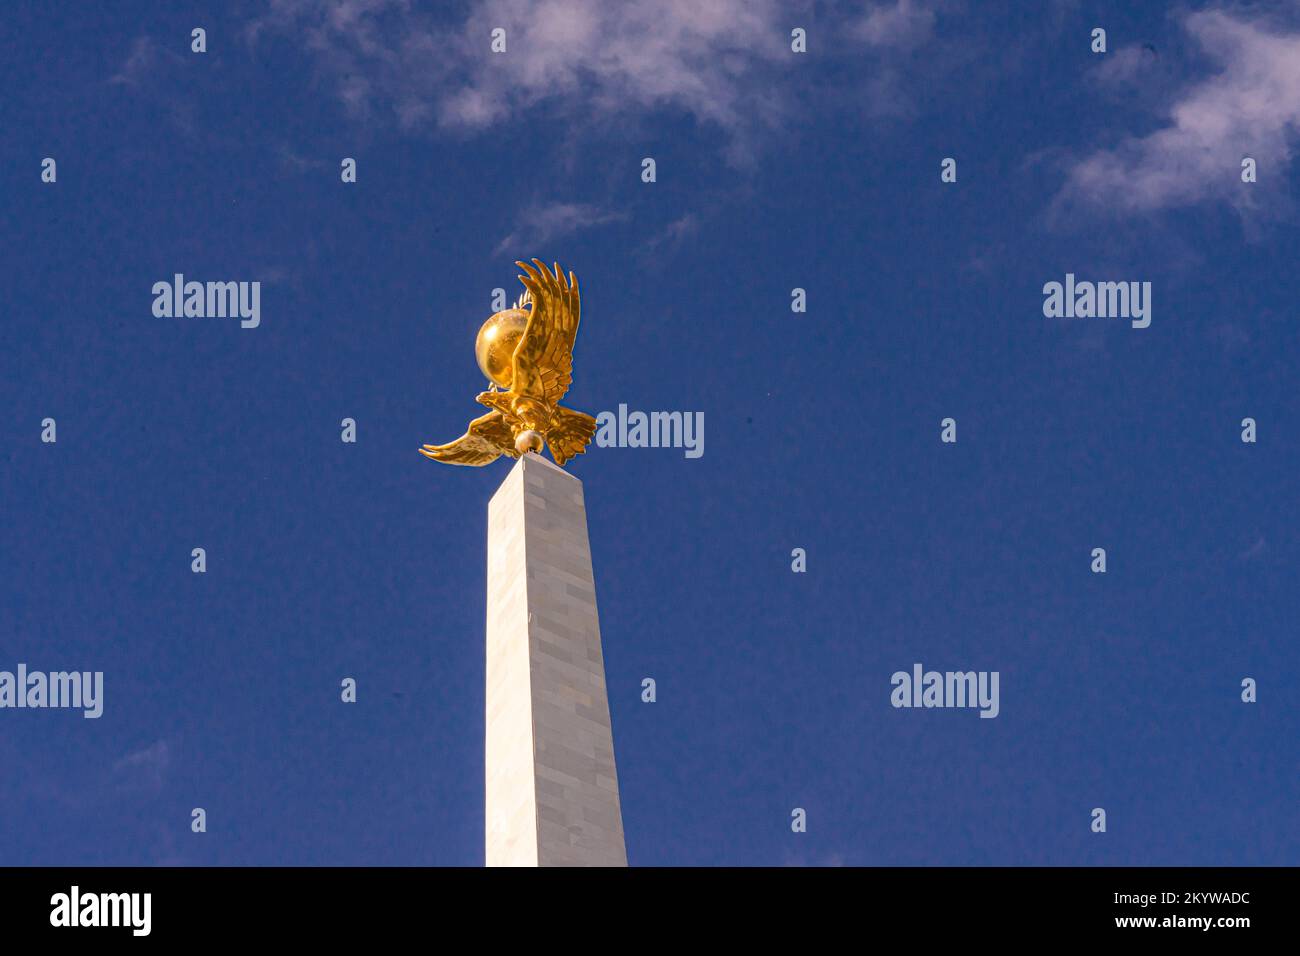 Kazakstan symbols: Golden eagle with globe: Stela of independence of Kazakhstan. Karaganda, Kazakstan Stock Photo